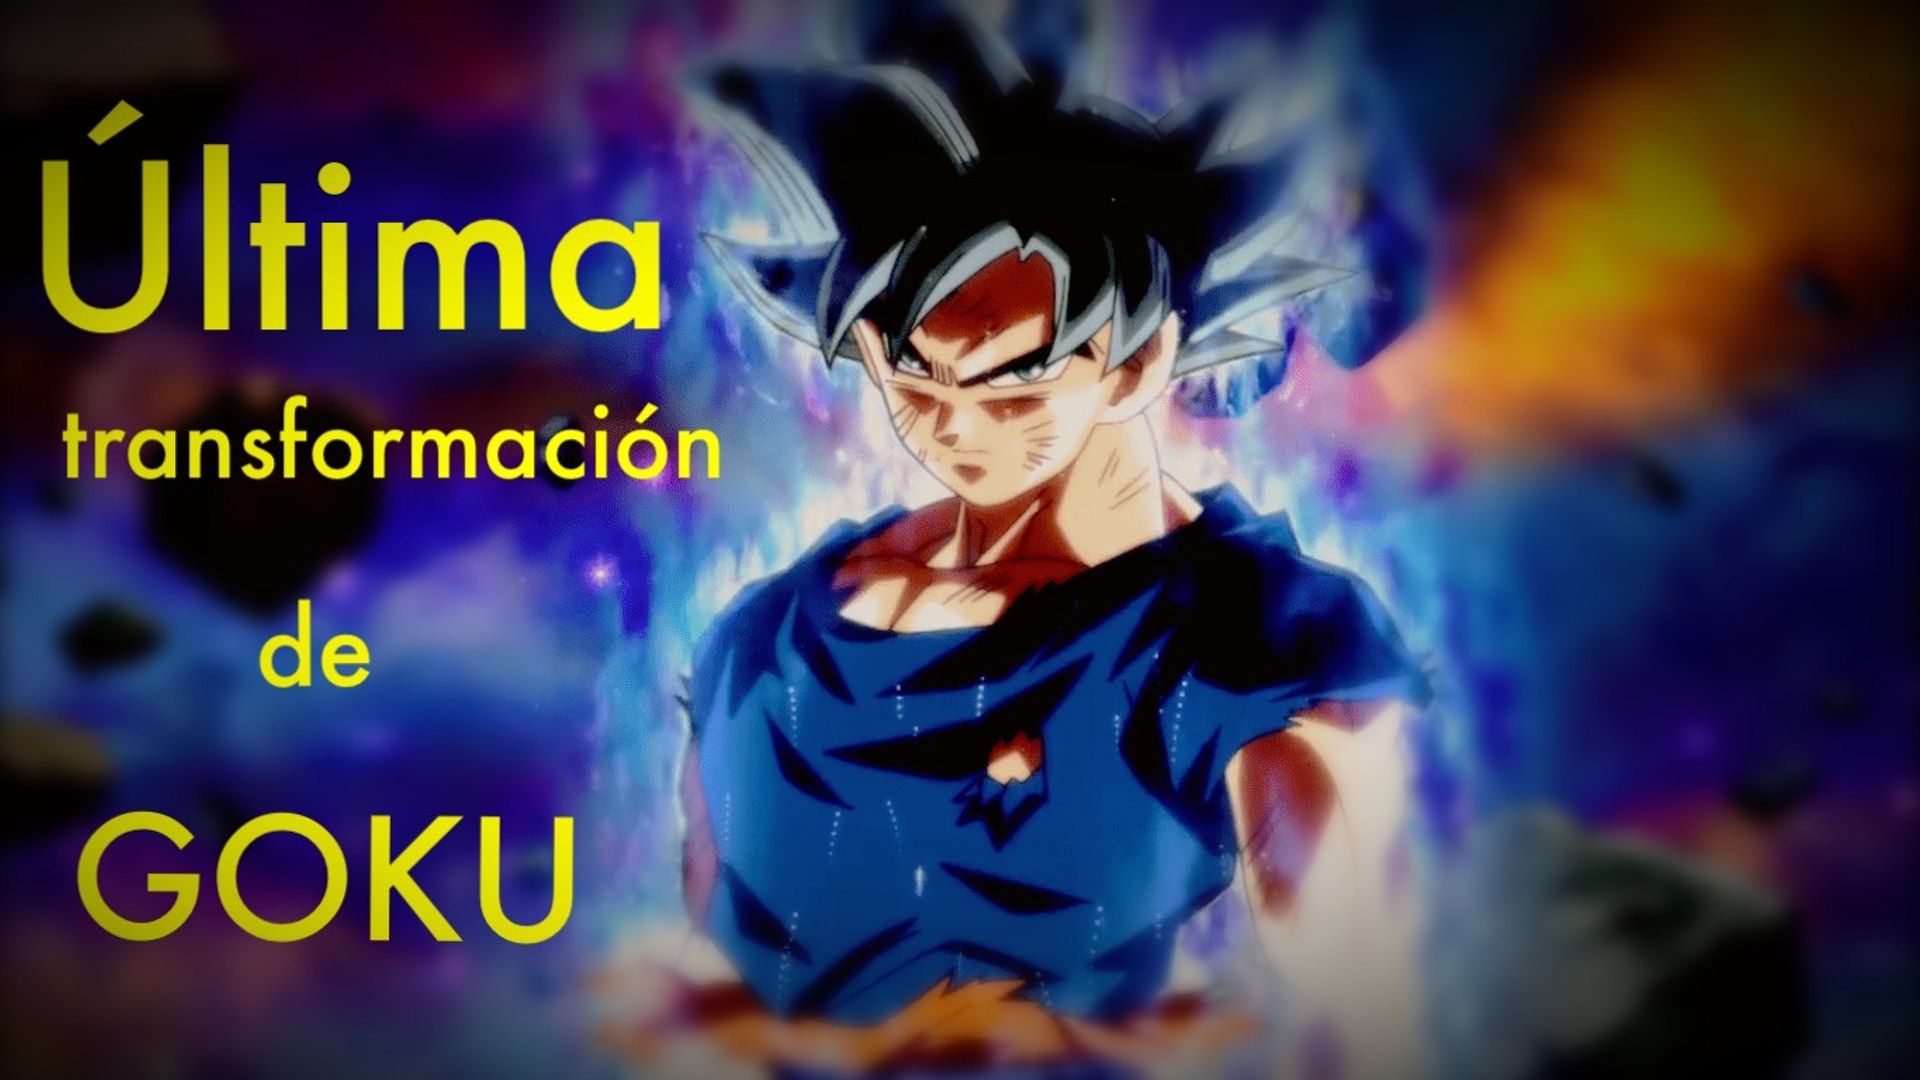 Ultima transformación de Goku!!! - Vídeo Dailymotion